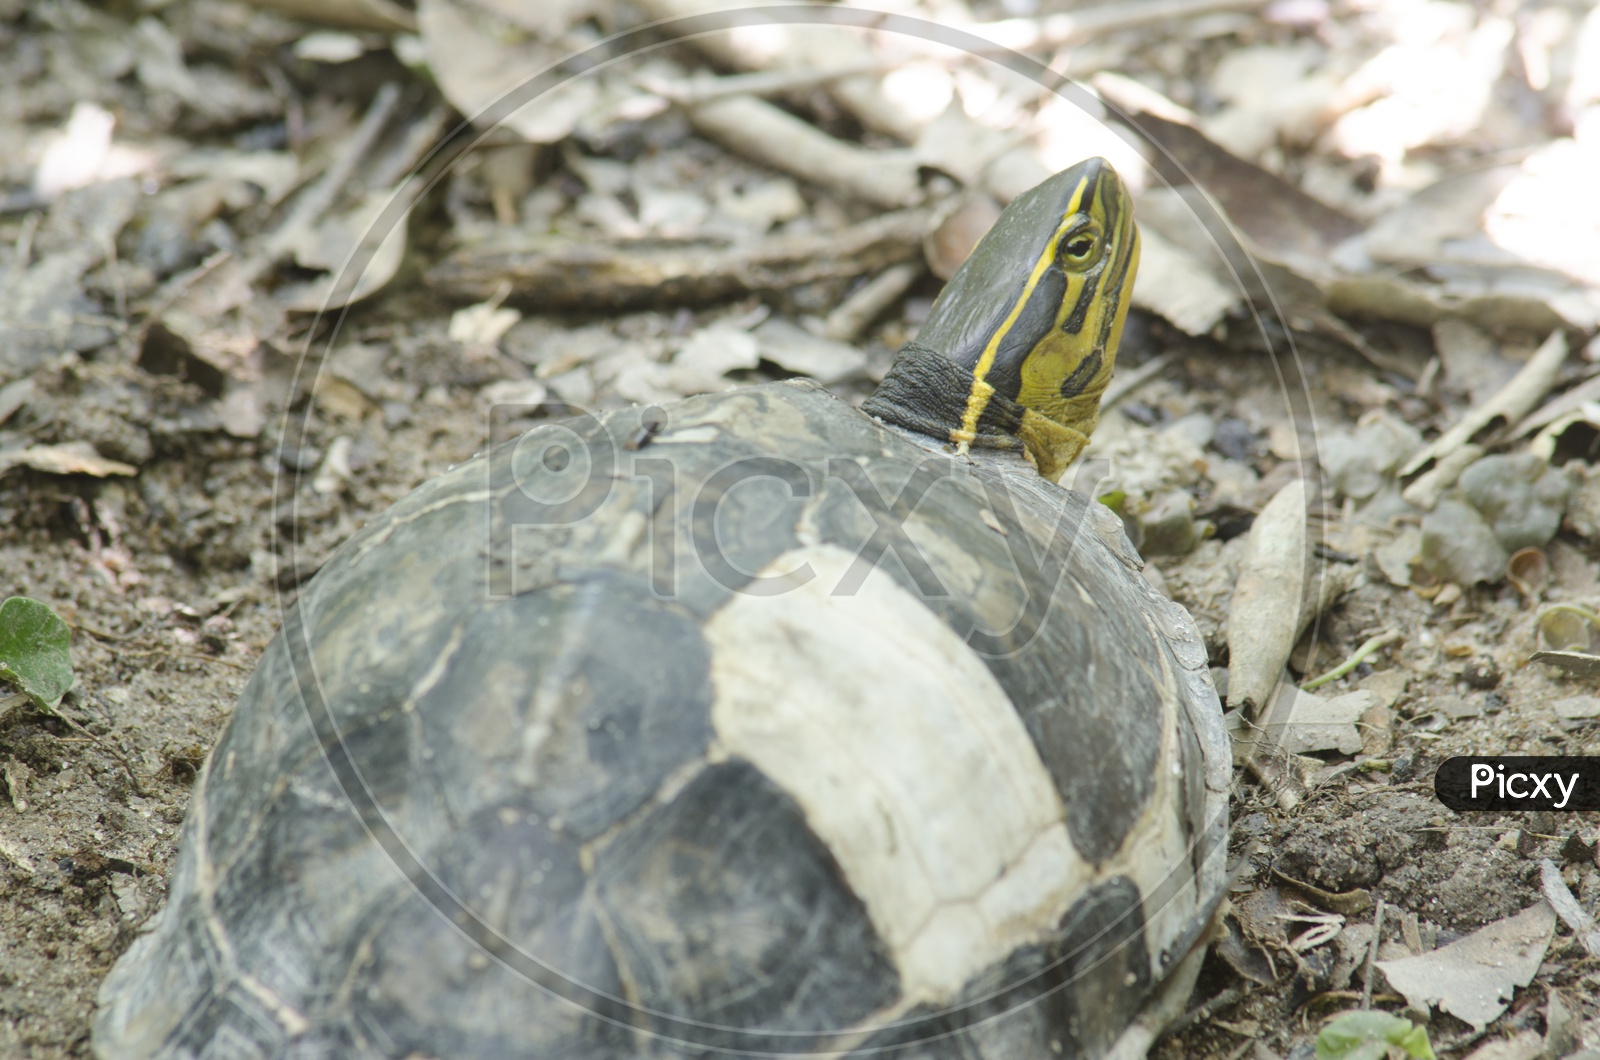 An adult gopher tortoise in Thailand